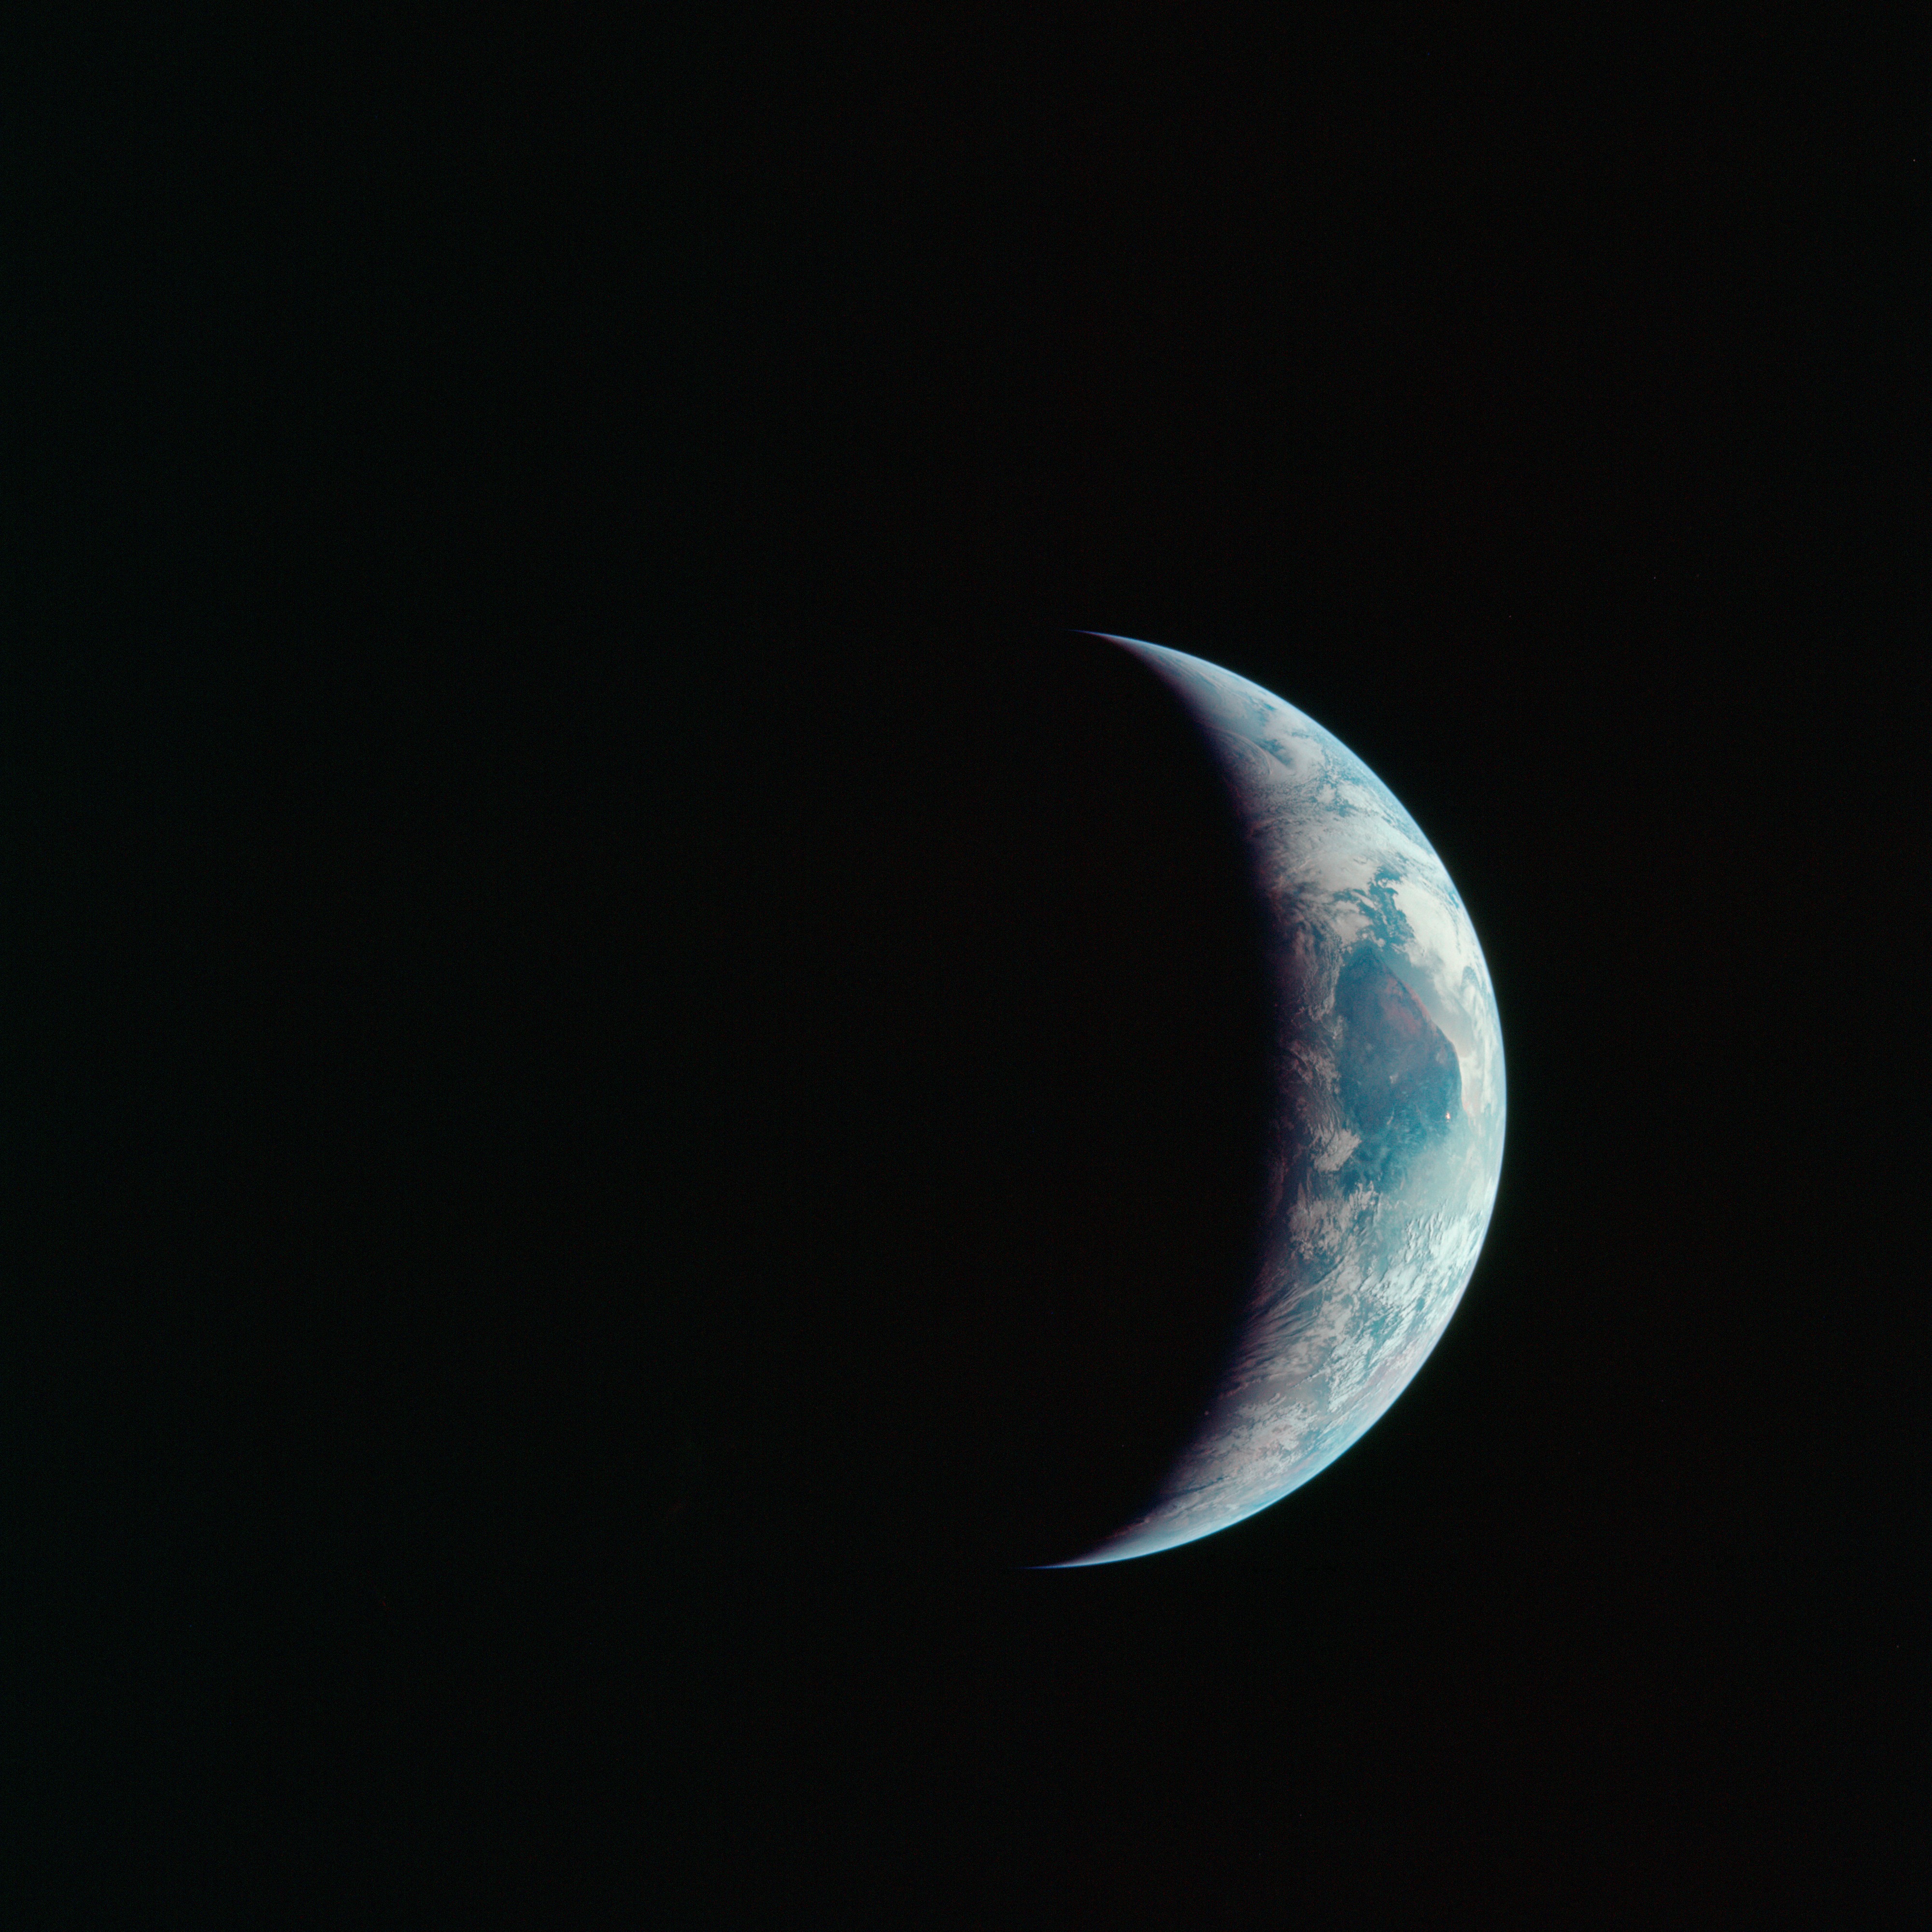 Crescent Earth seen from Apollo 11